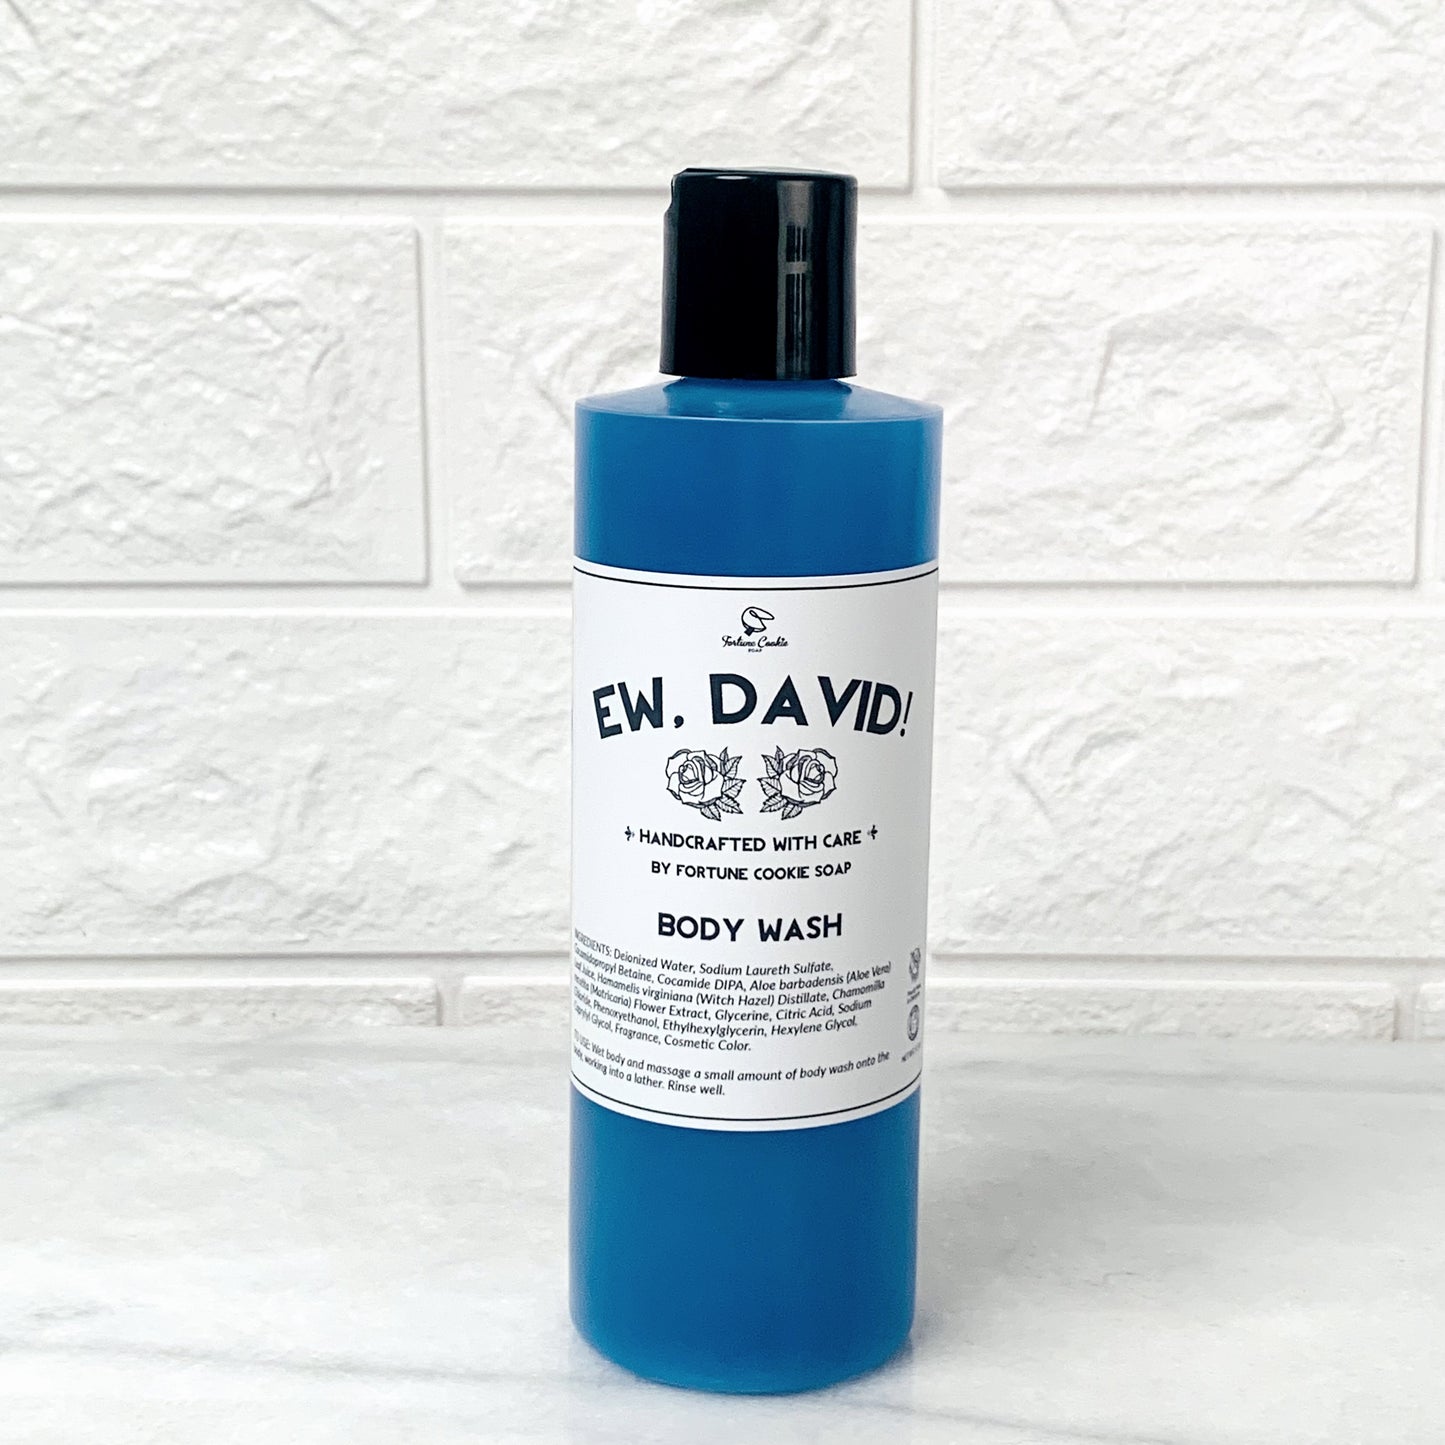 EW, DAVID Body Wash